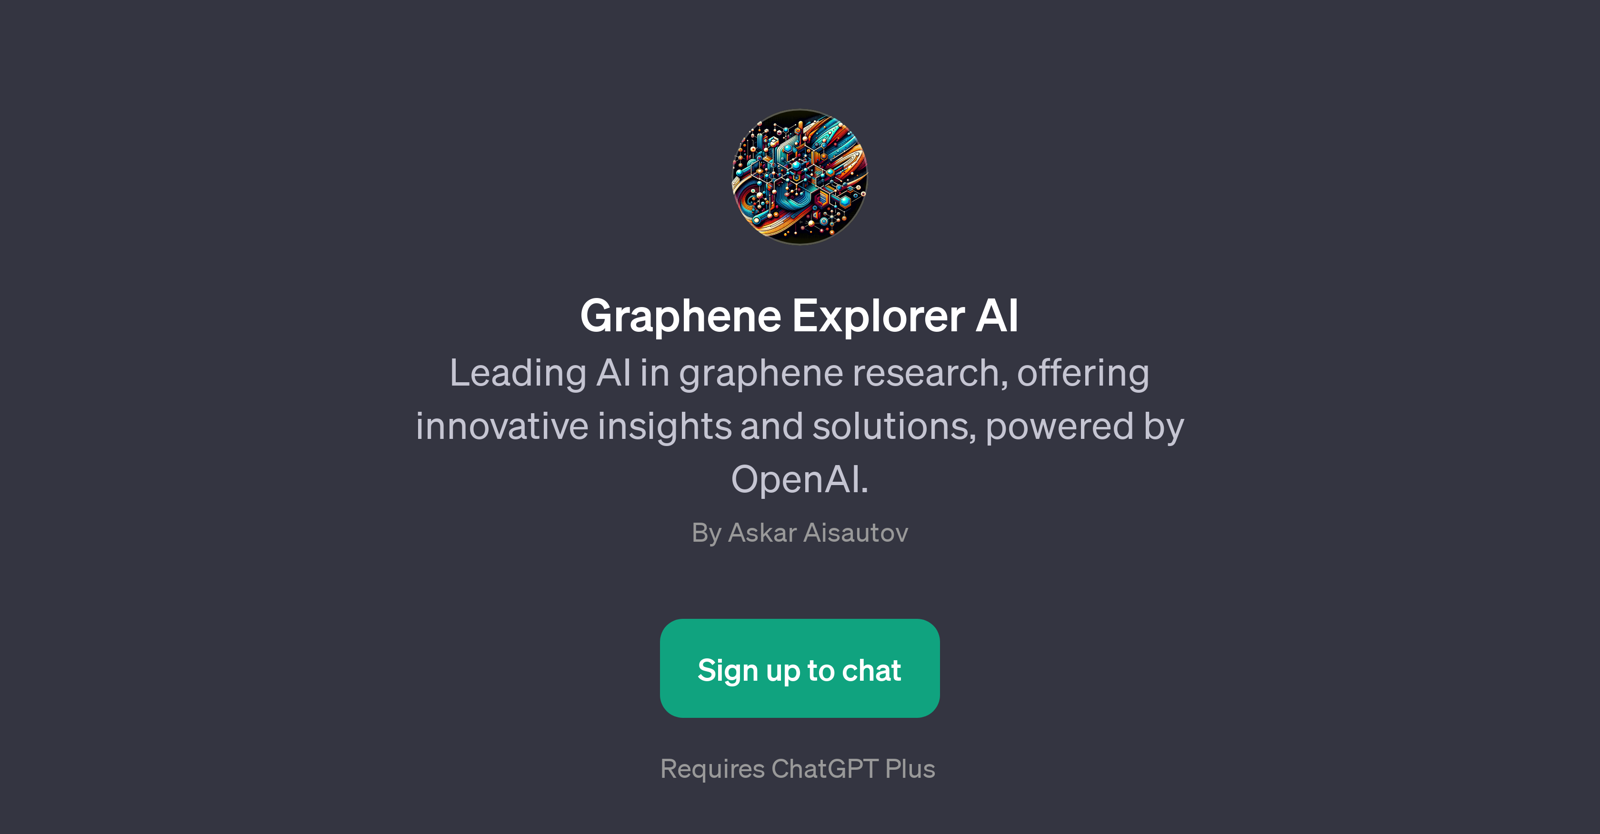 Graphene Explorer AI website